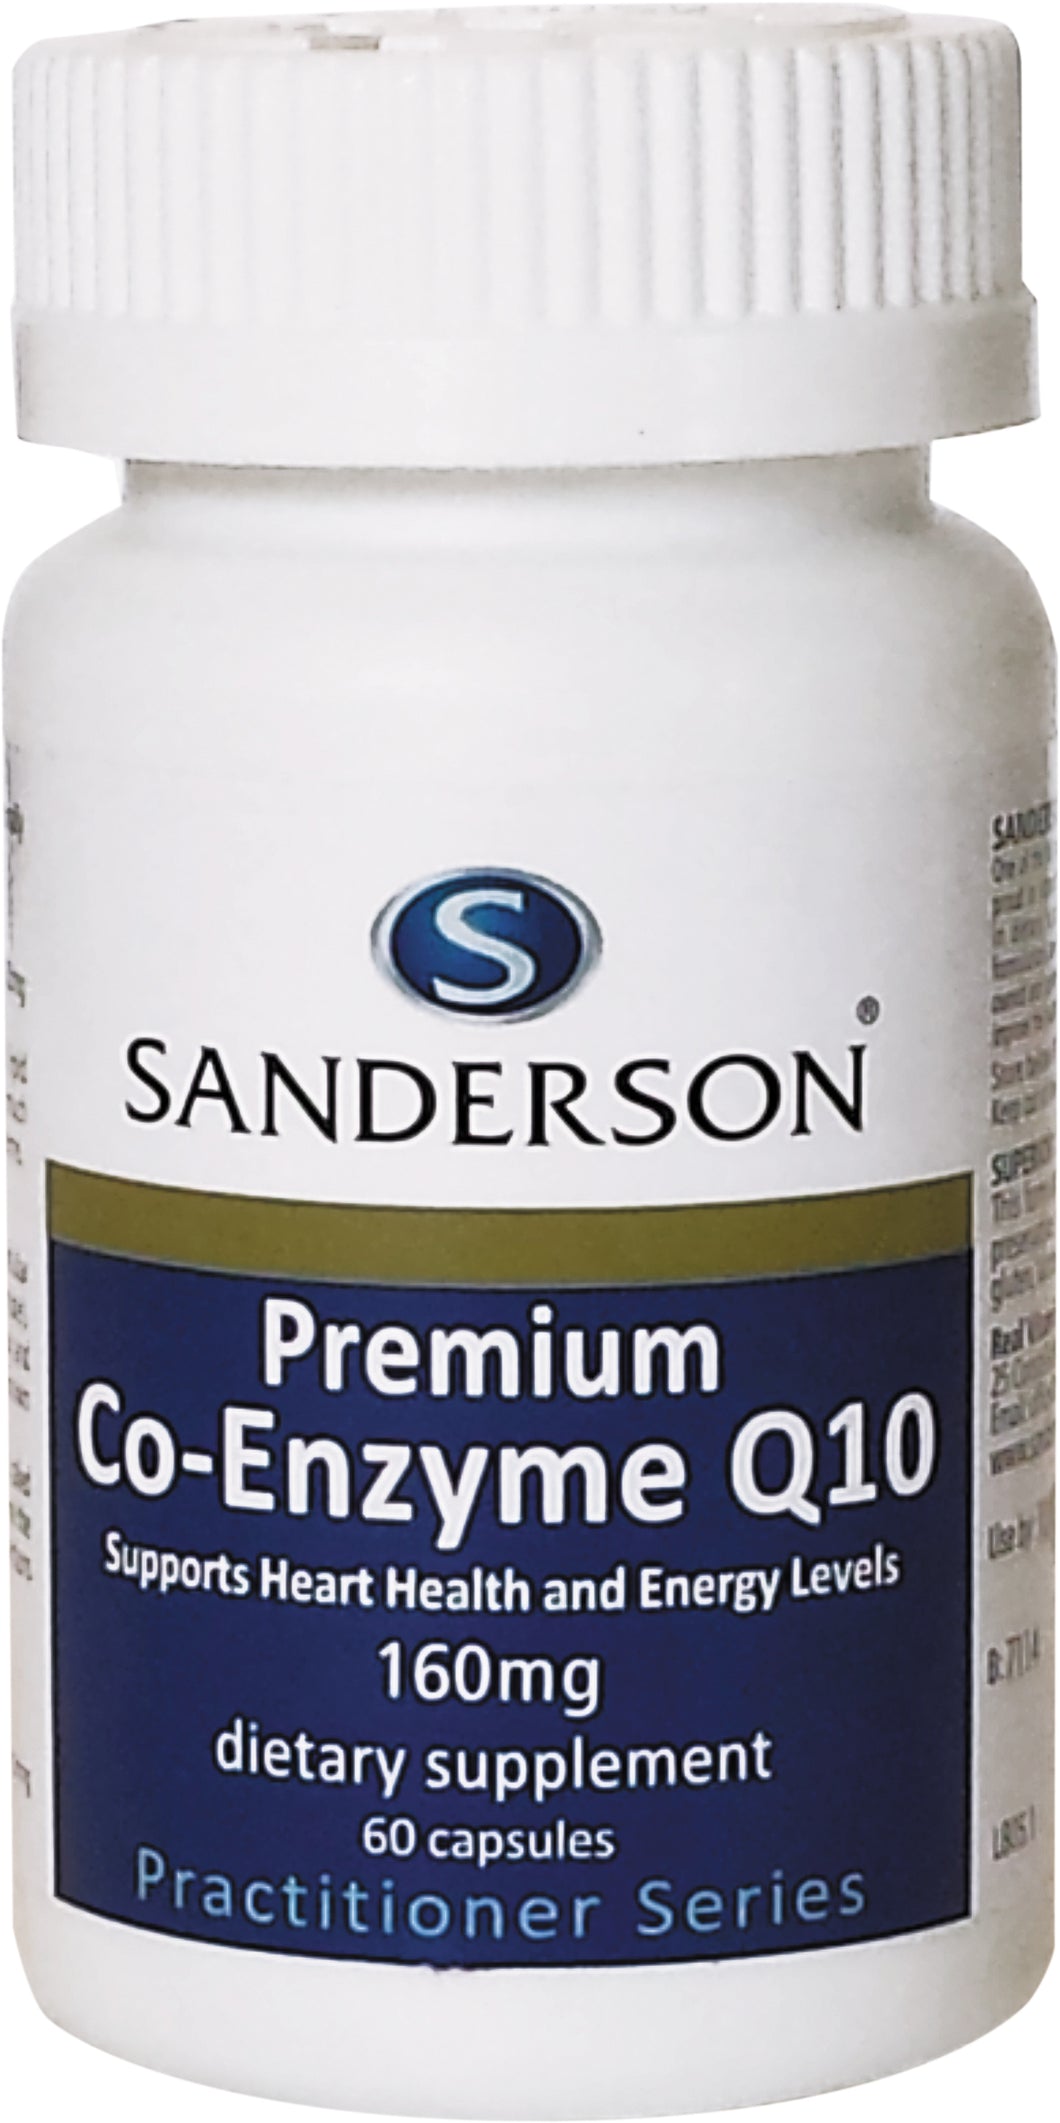 Premium Co-Enzyme Q10 160mg Softgels